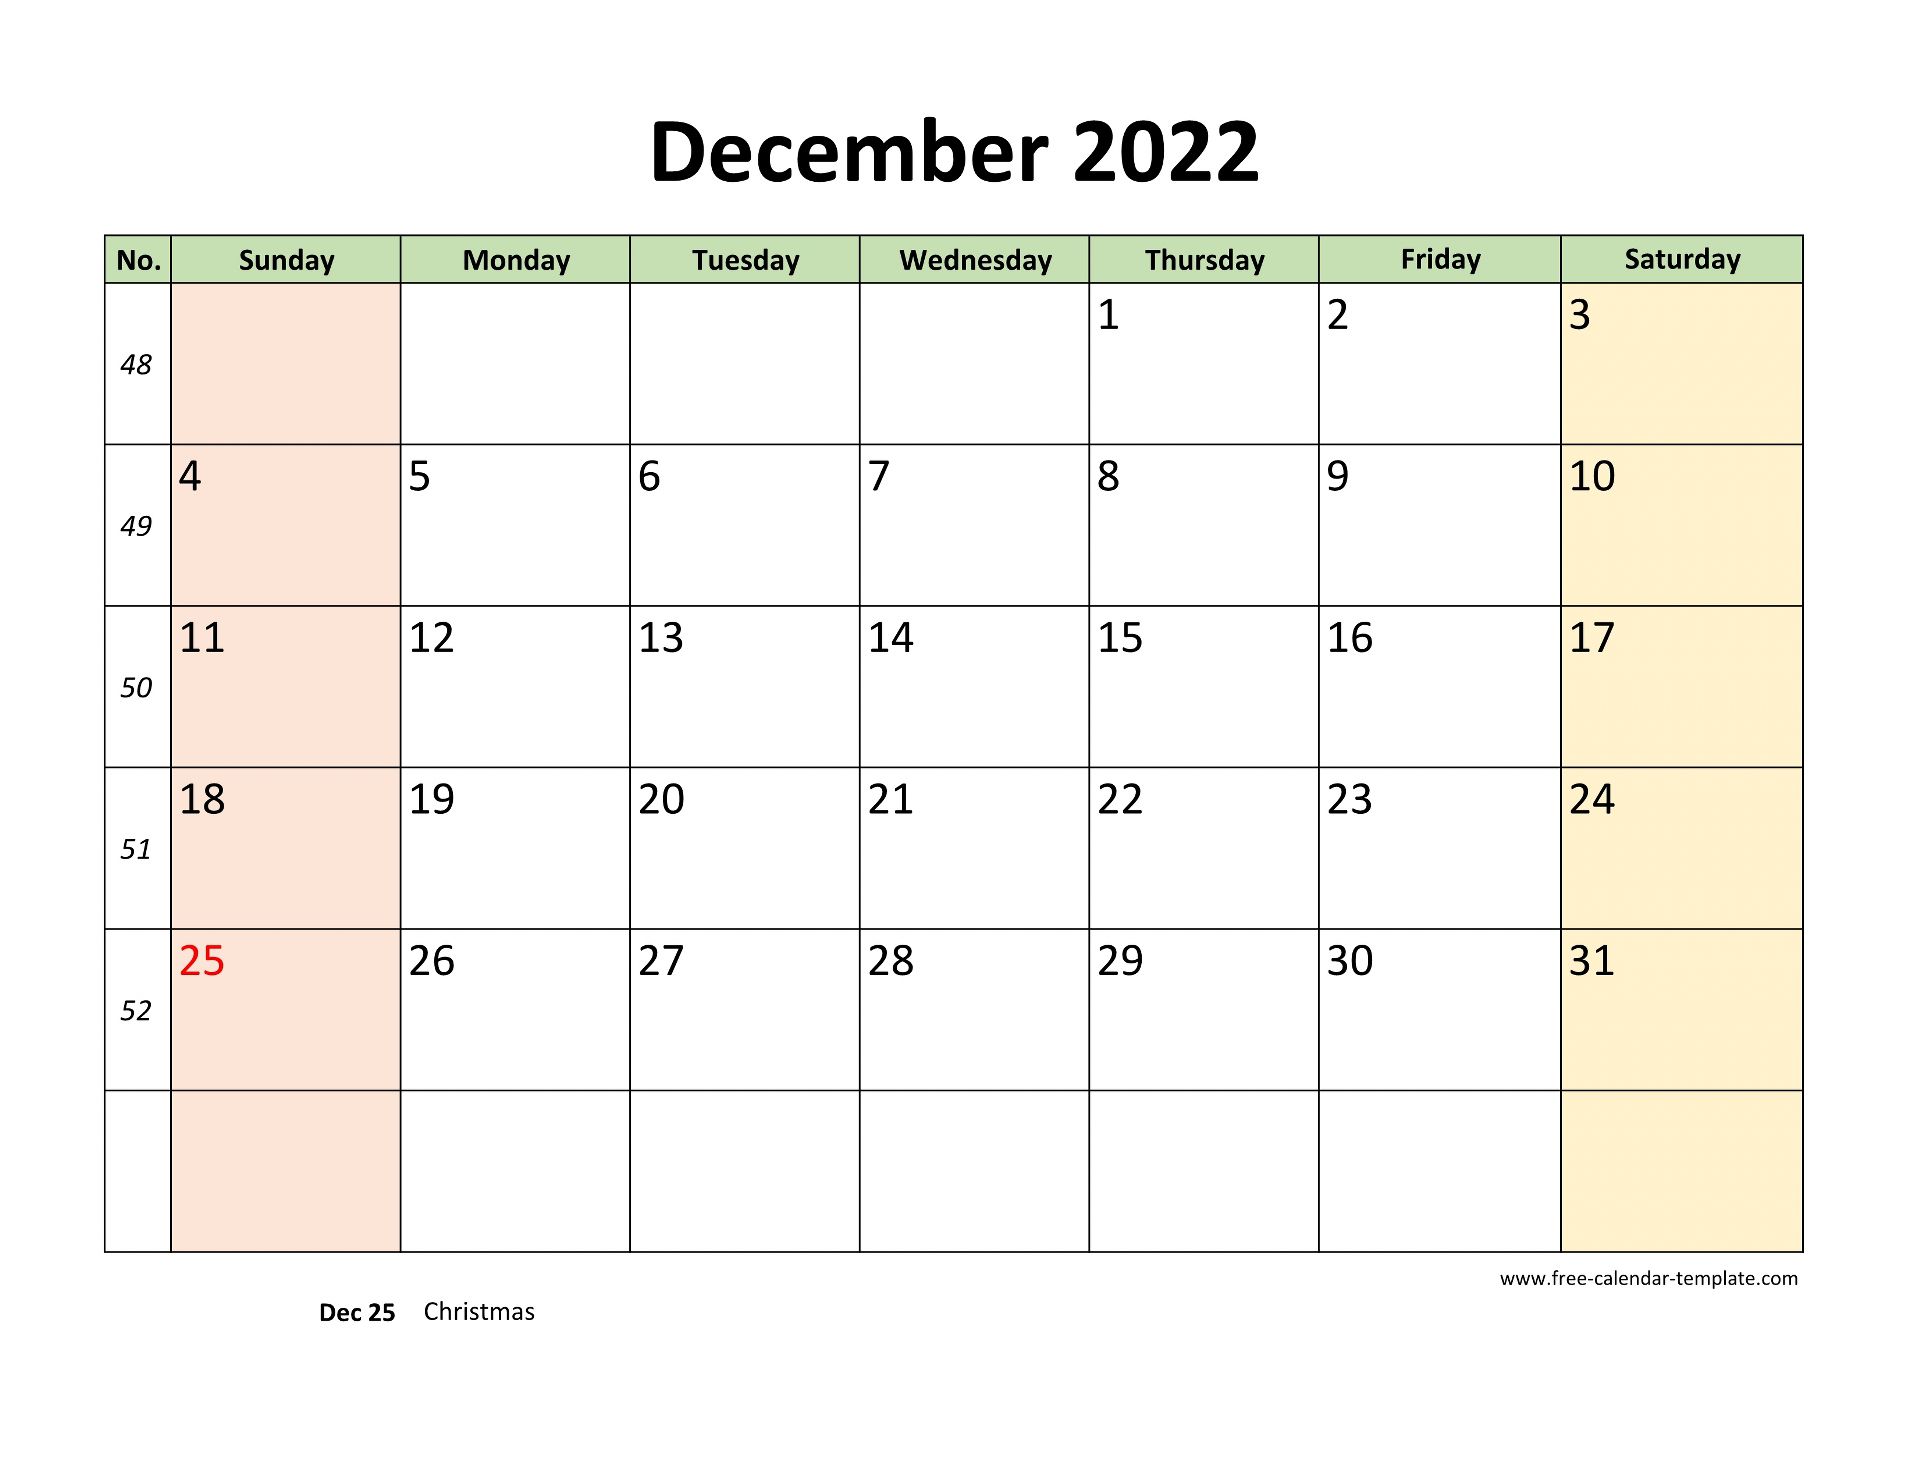 December 2022 Calendar Printable Free